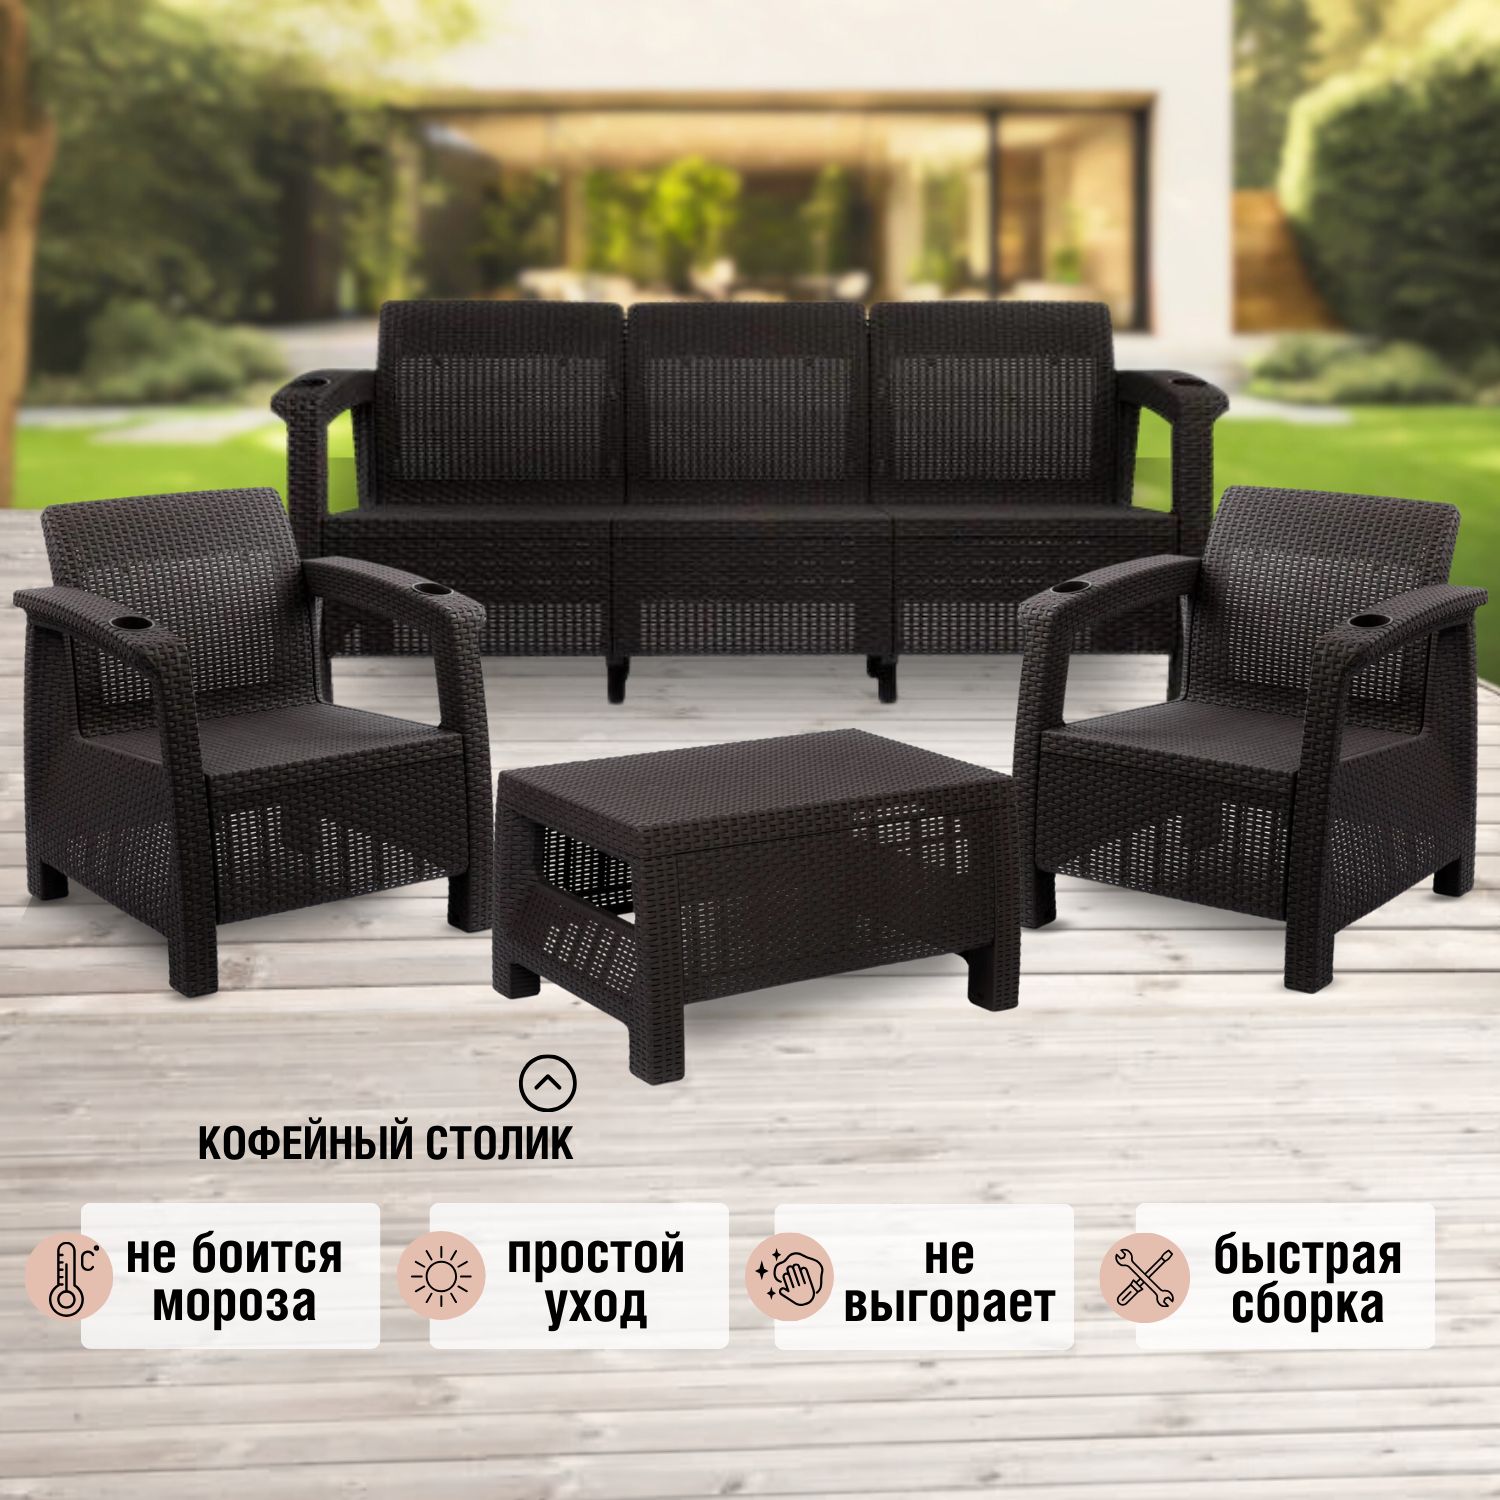 Комплект мебели для сада и дачи Альтернатива MSet RT0108 коричневый диван+стол+2 кресла